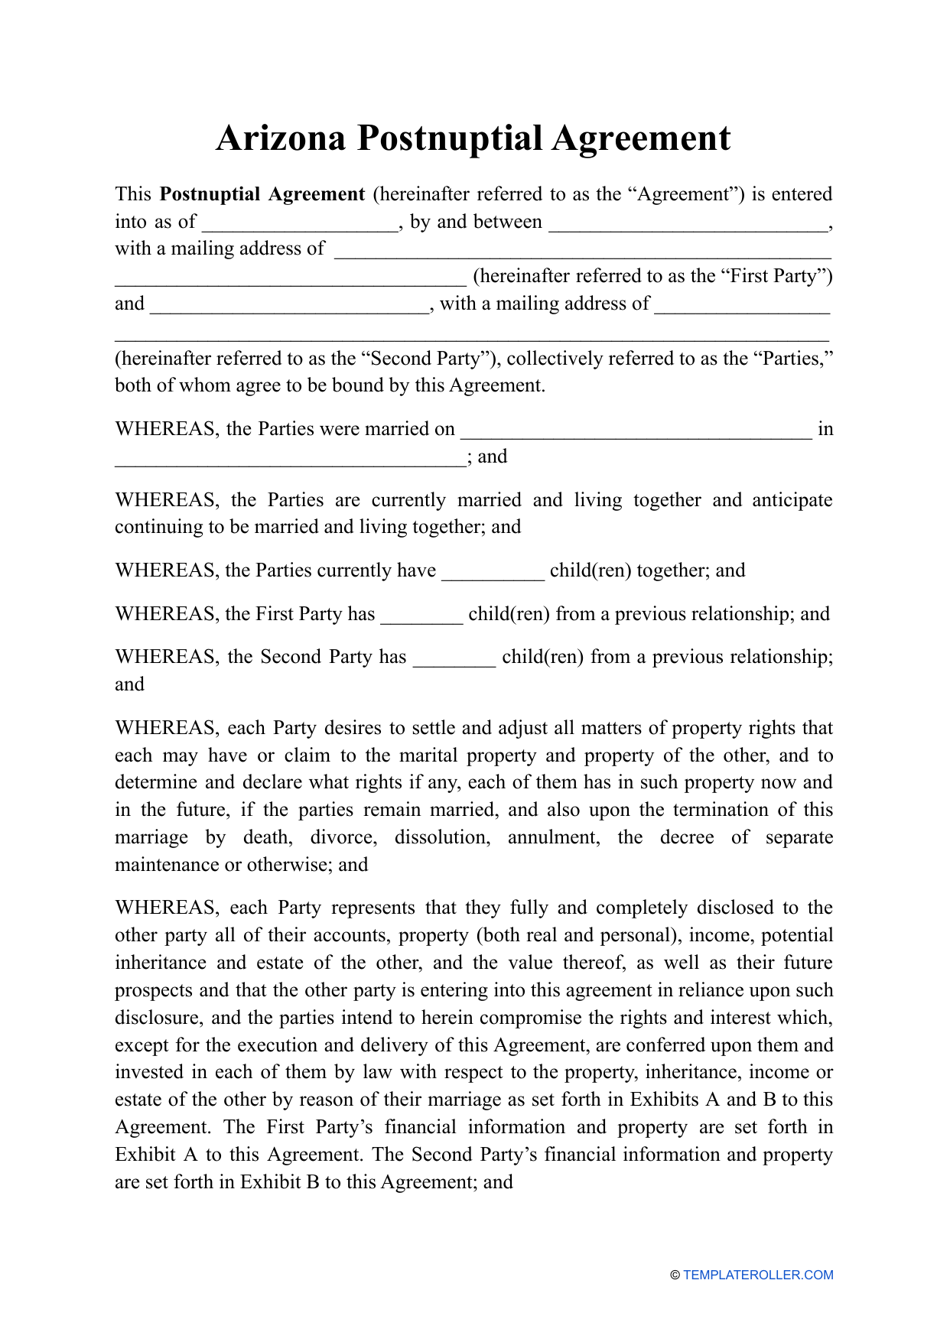 Postnuptial Agreement Template - Arizona, Page 1